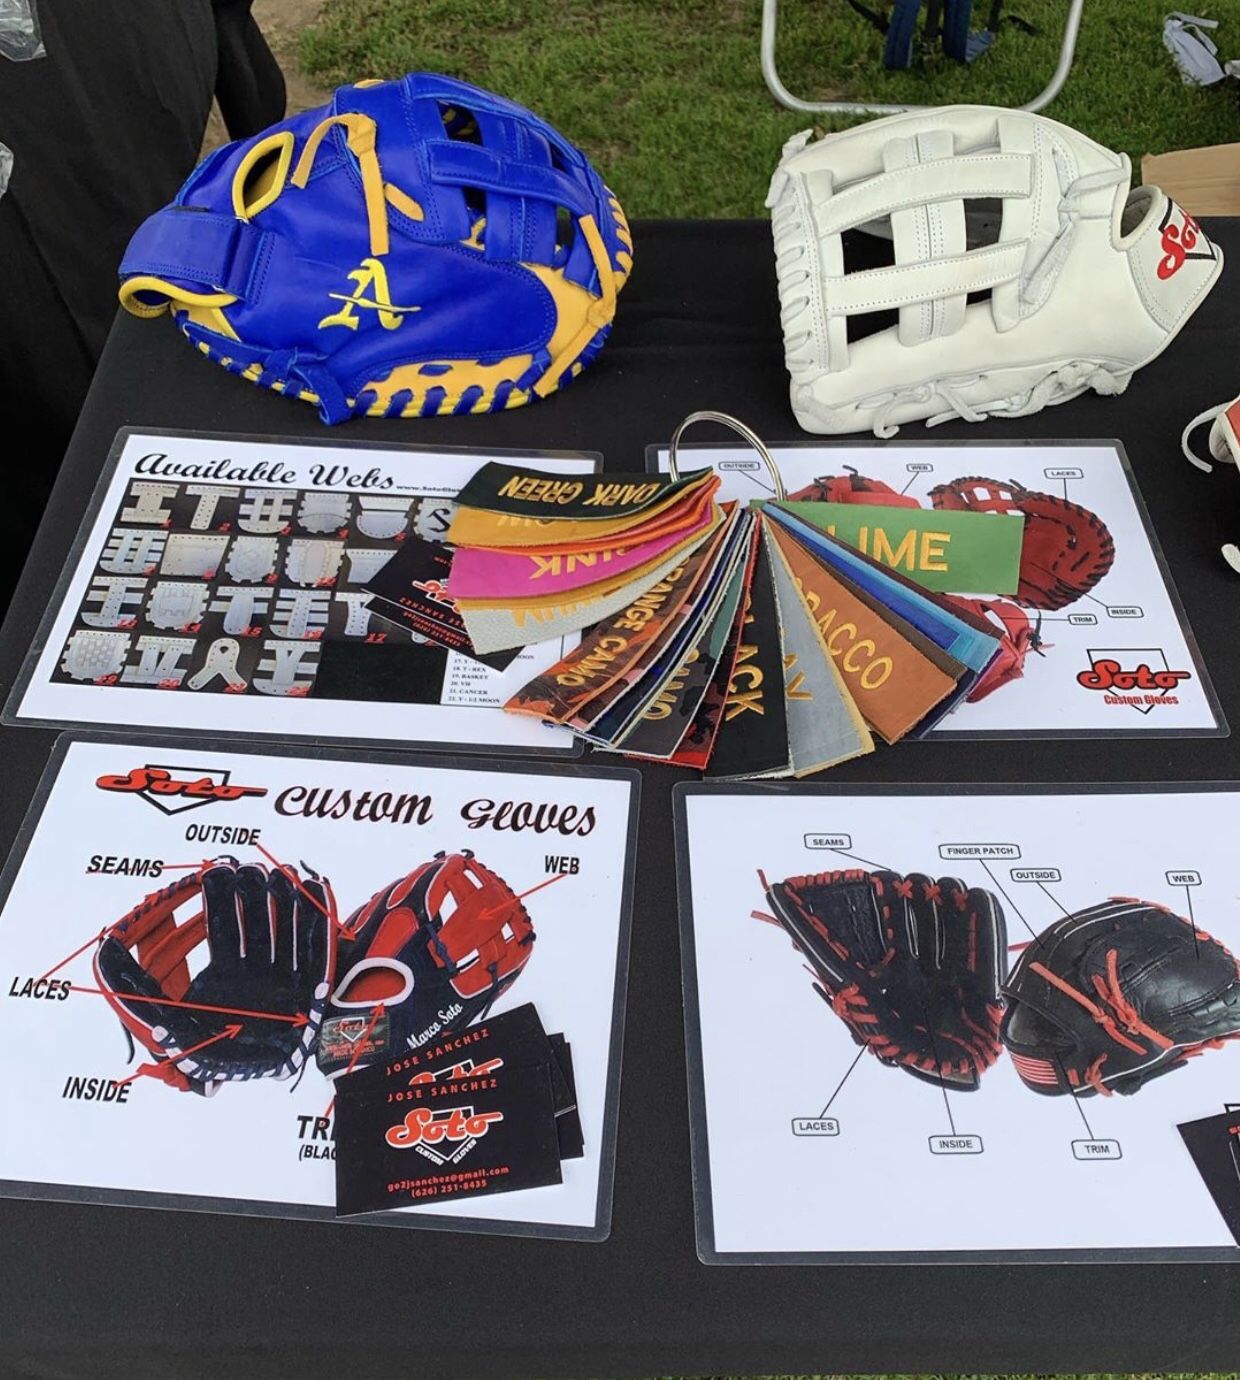 Custome Baseball/Softball gloves